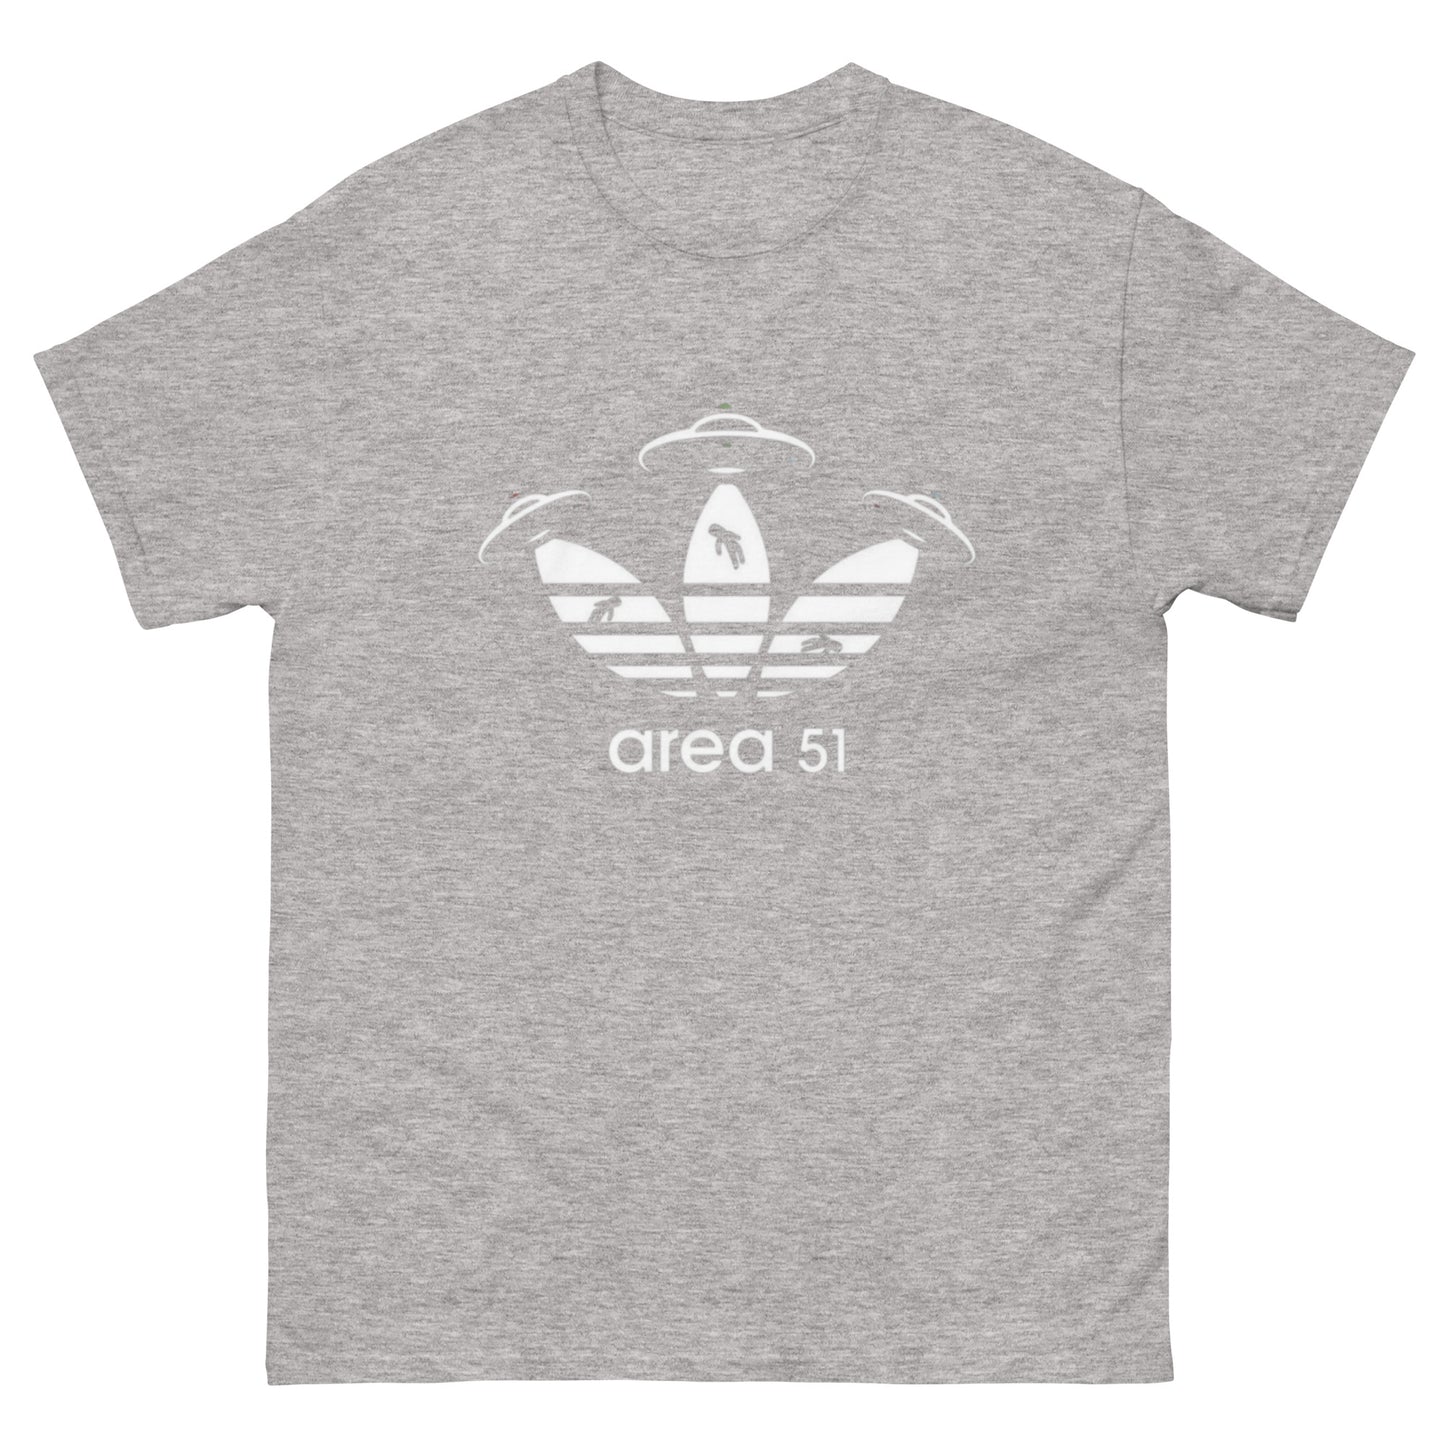 Area 51 T-Shirt